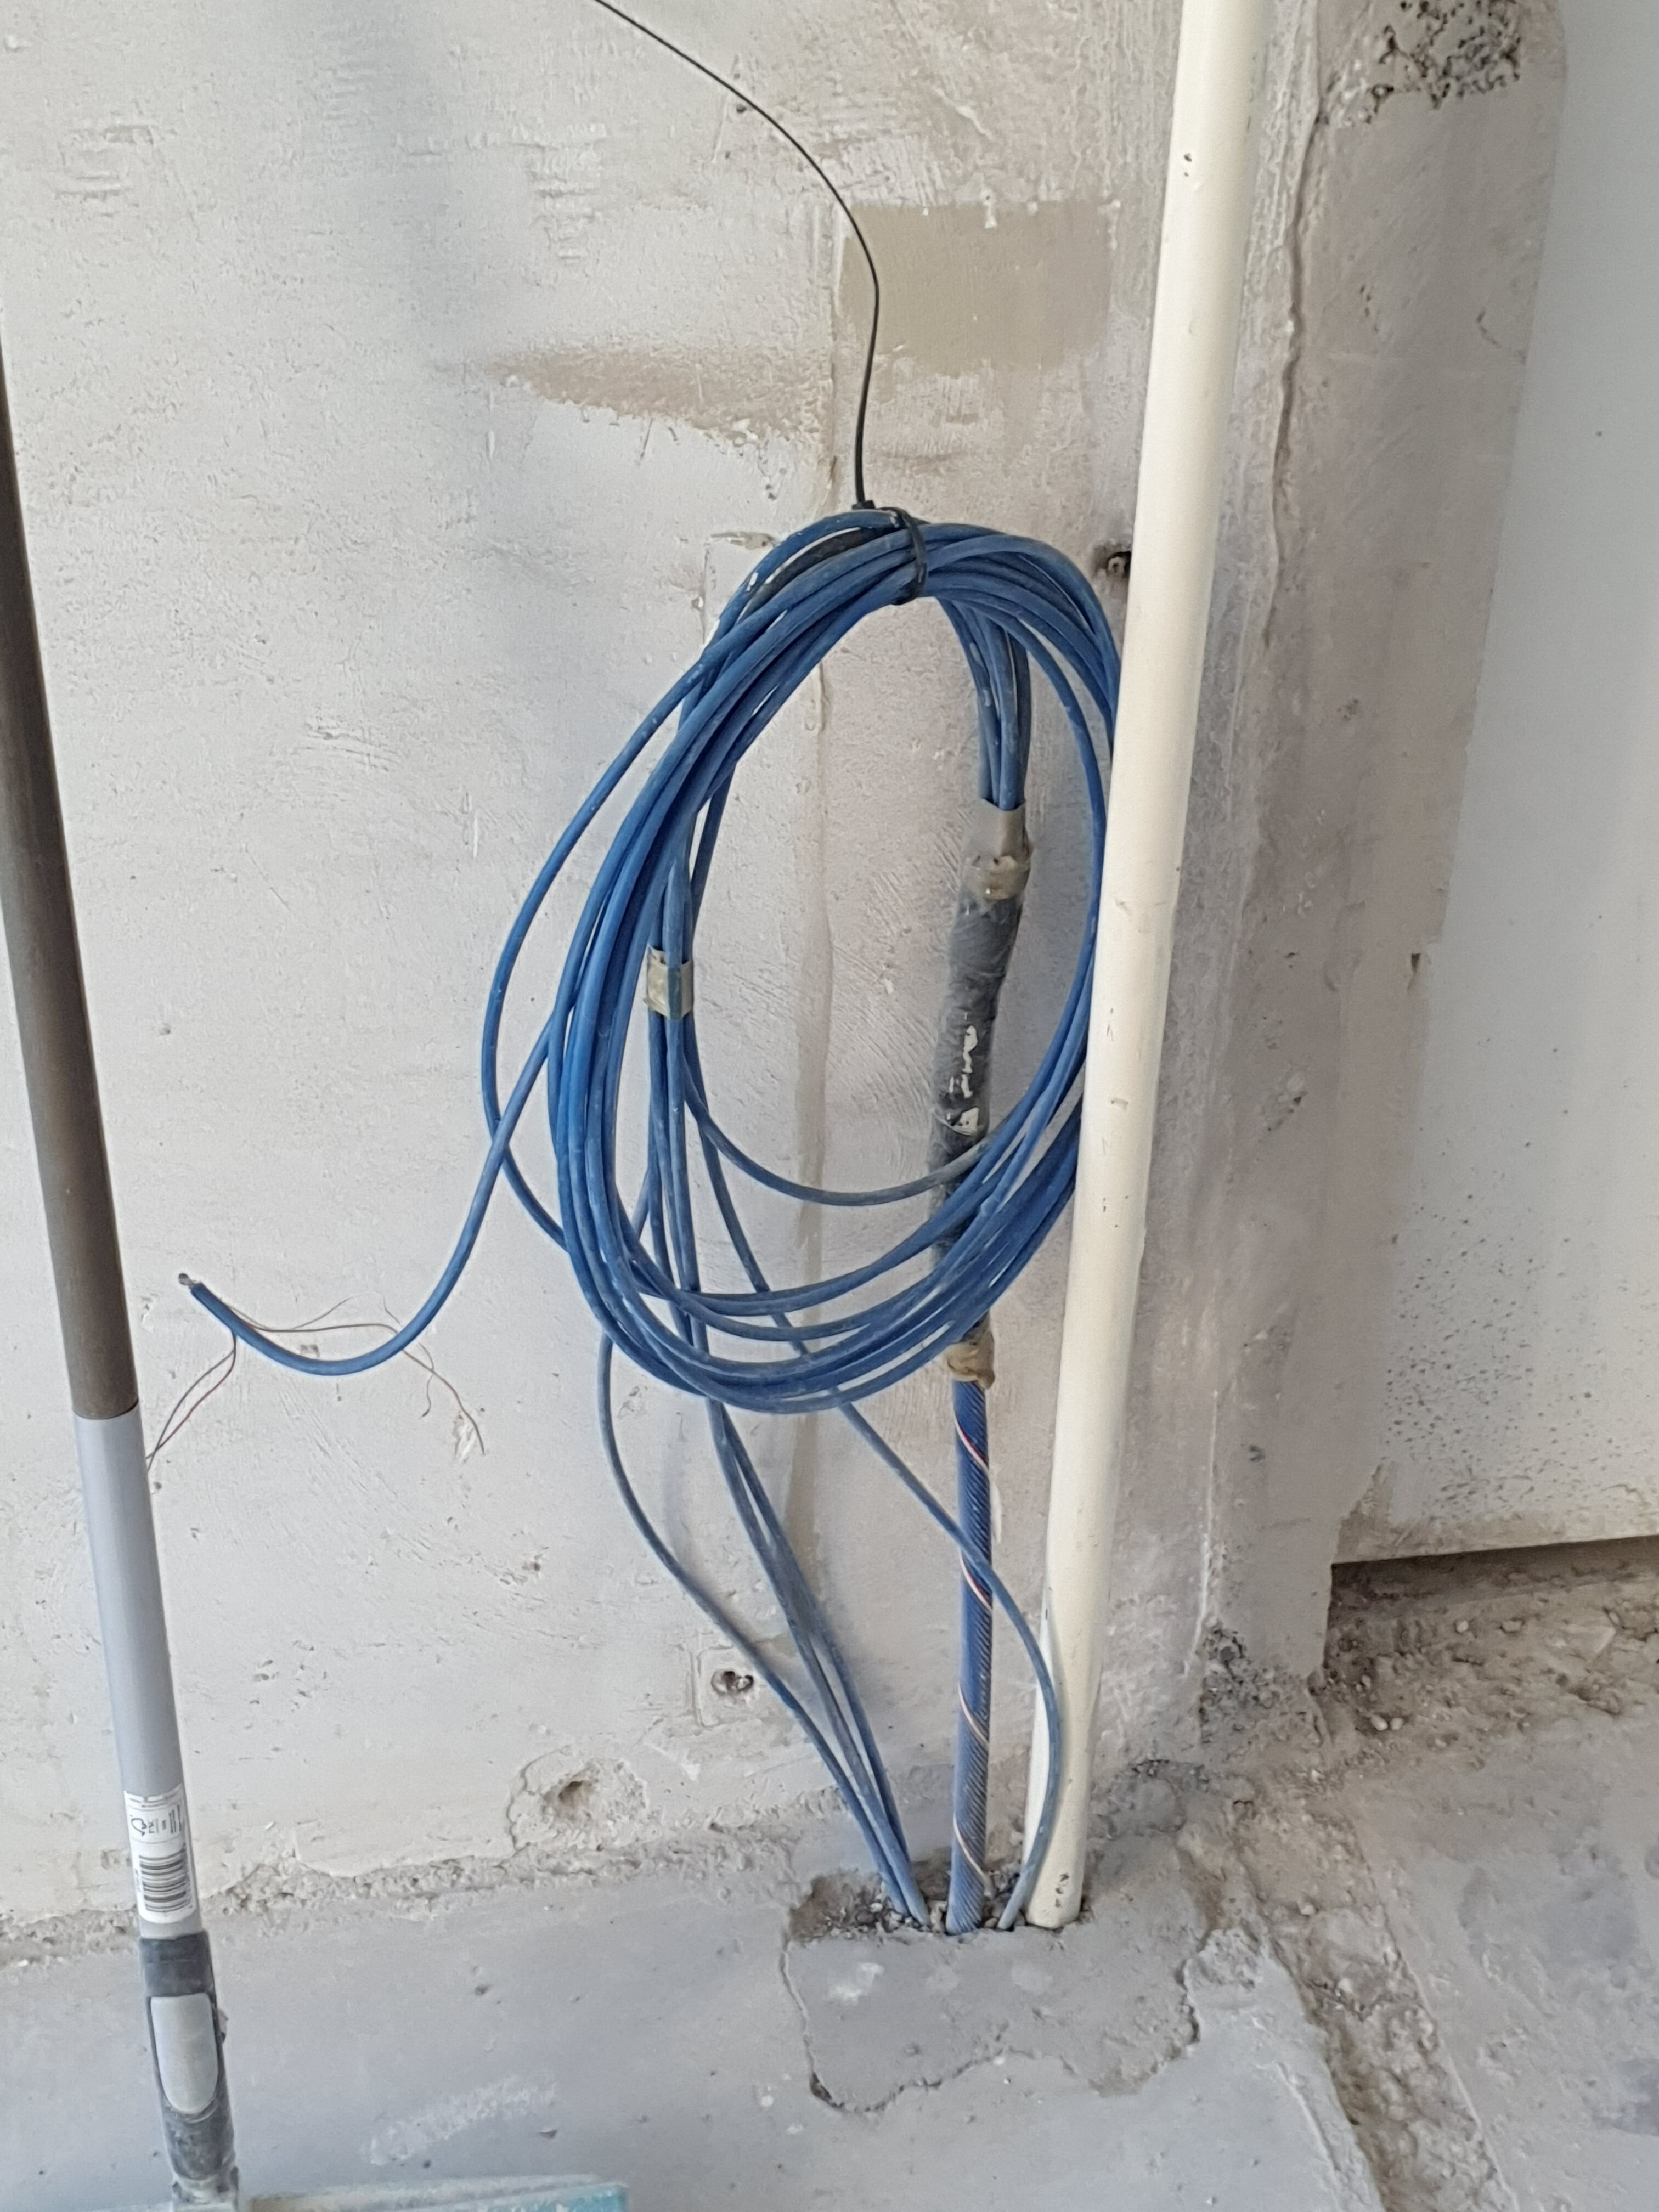 Denk vooruit George Eliot Aan het liegen Blauwe kabels in woonkamer | KPN Community